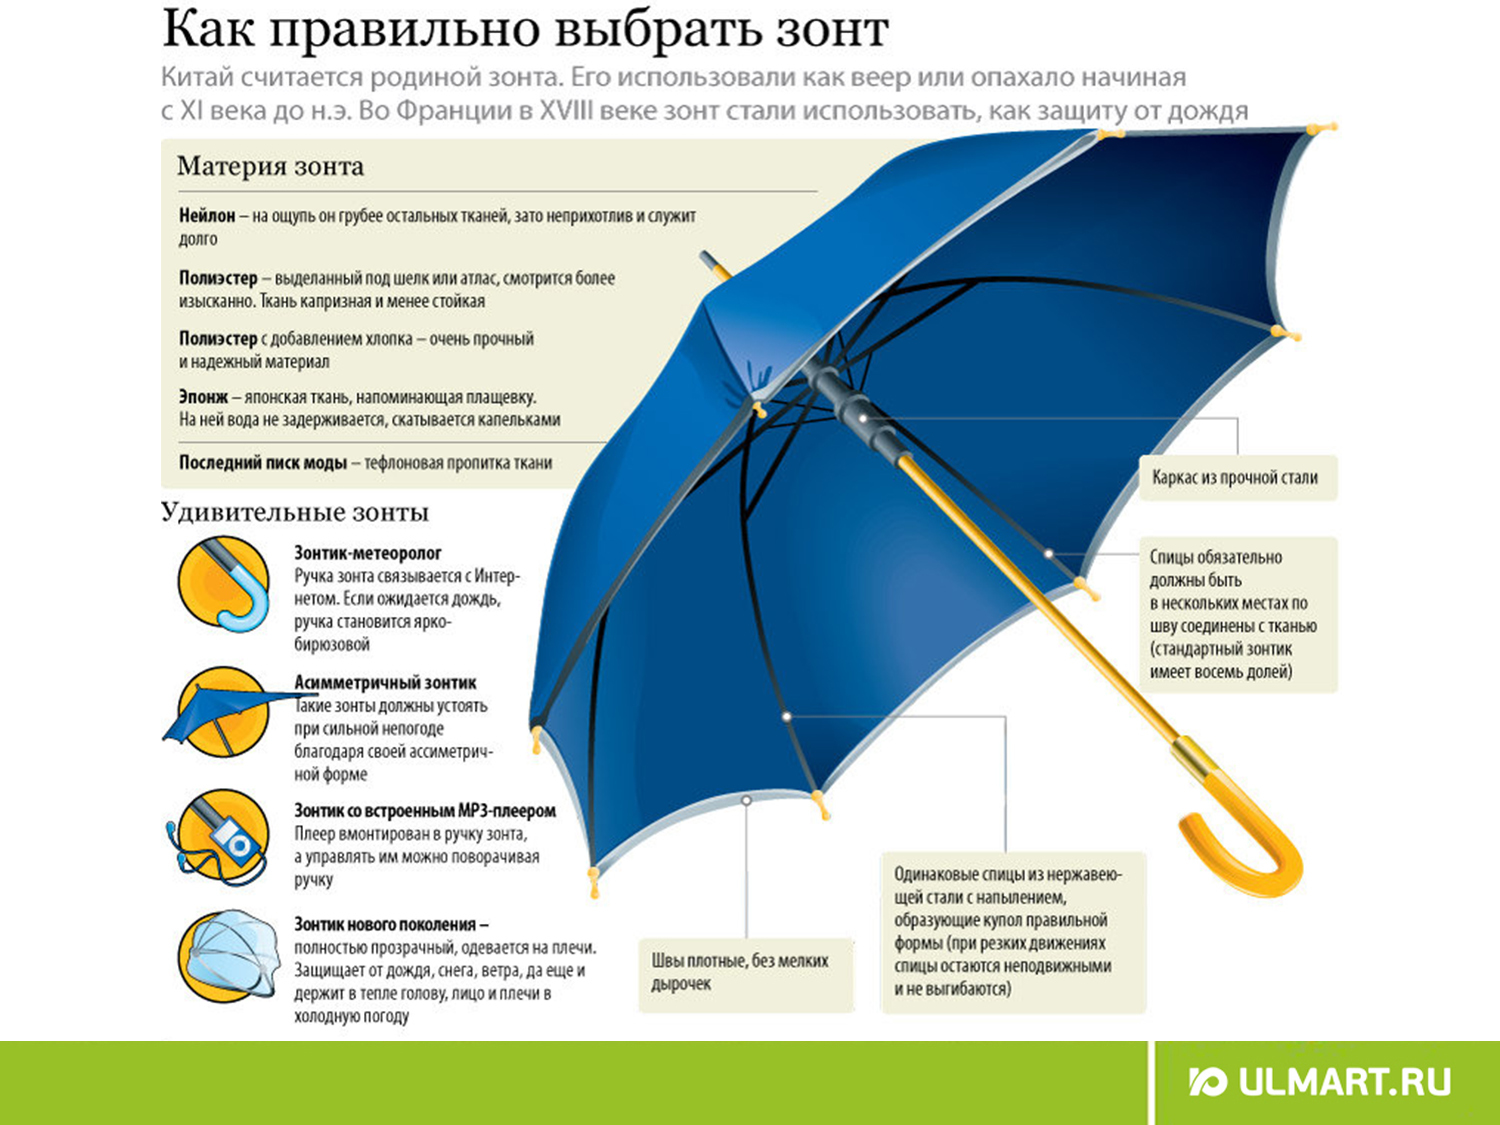 Характеристики зонтика. Части зонта. Название частей зонта. Строение зонтика. Составные части зонтика.